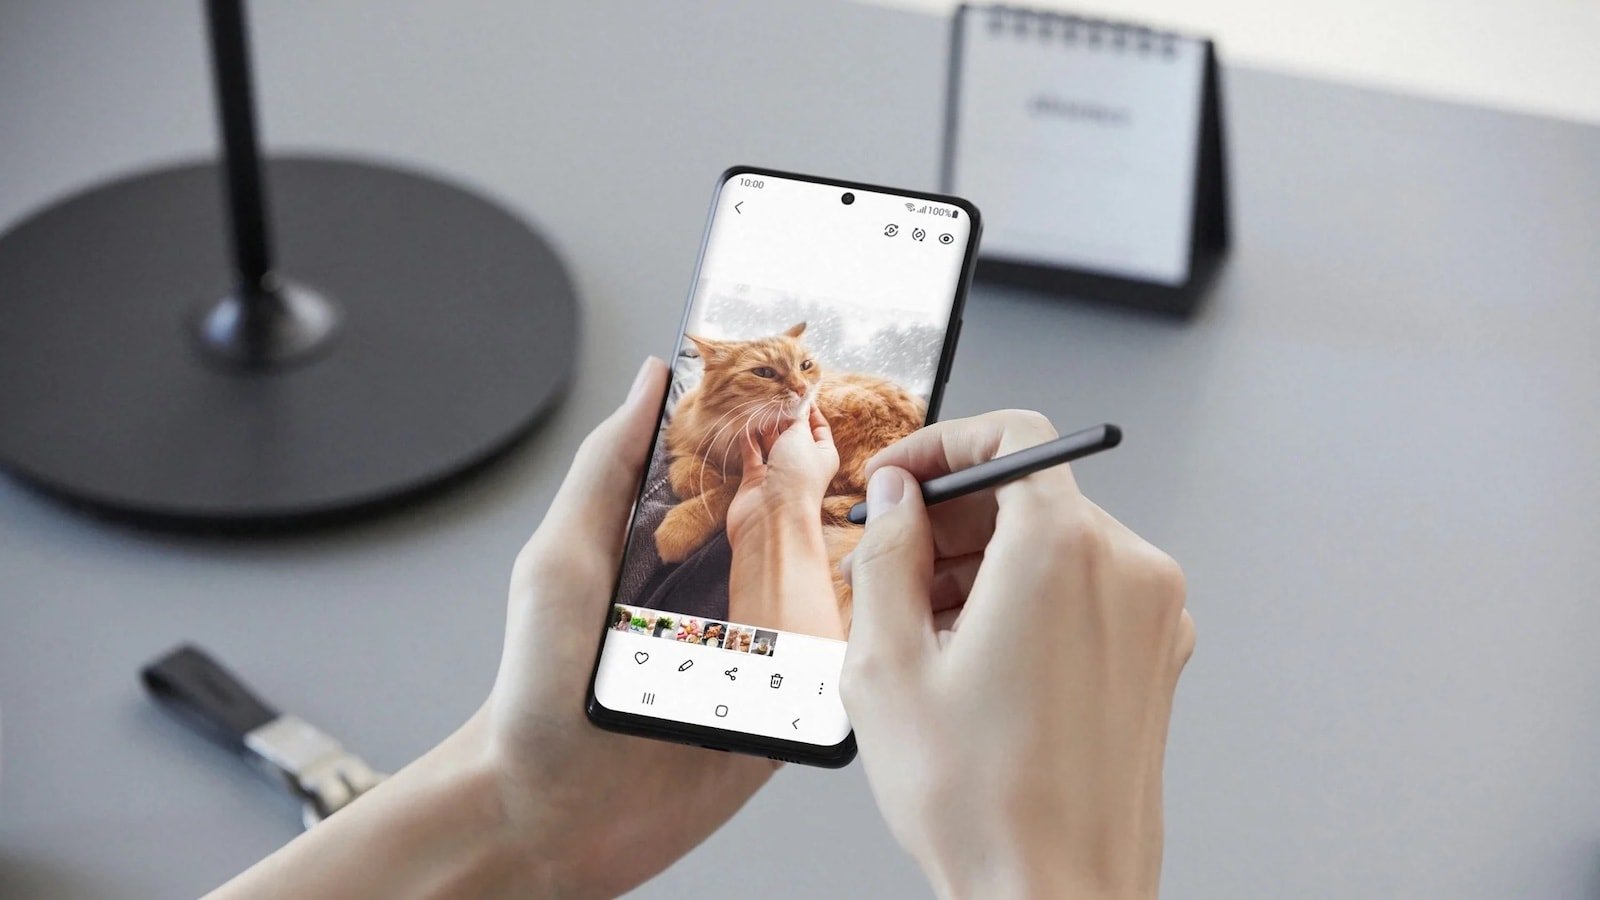 Samsung Galaxy S21 Ultra 5G S-Pen makes writing and sketching feel natural